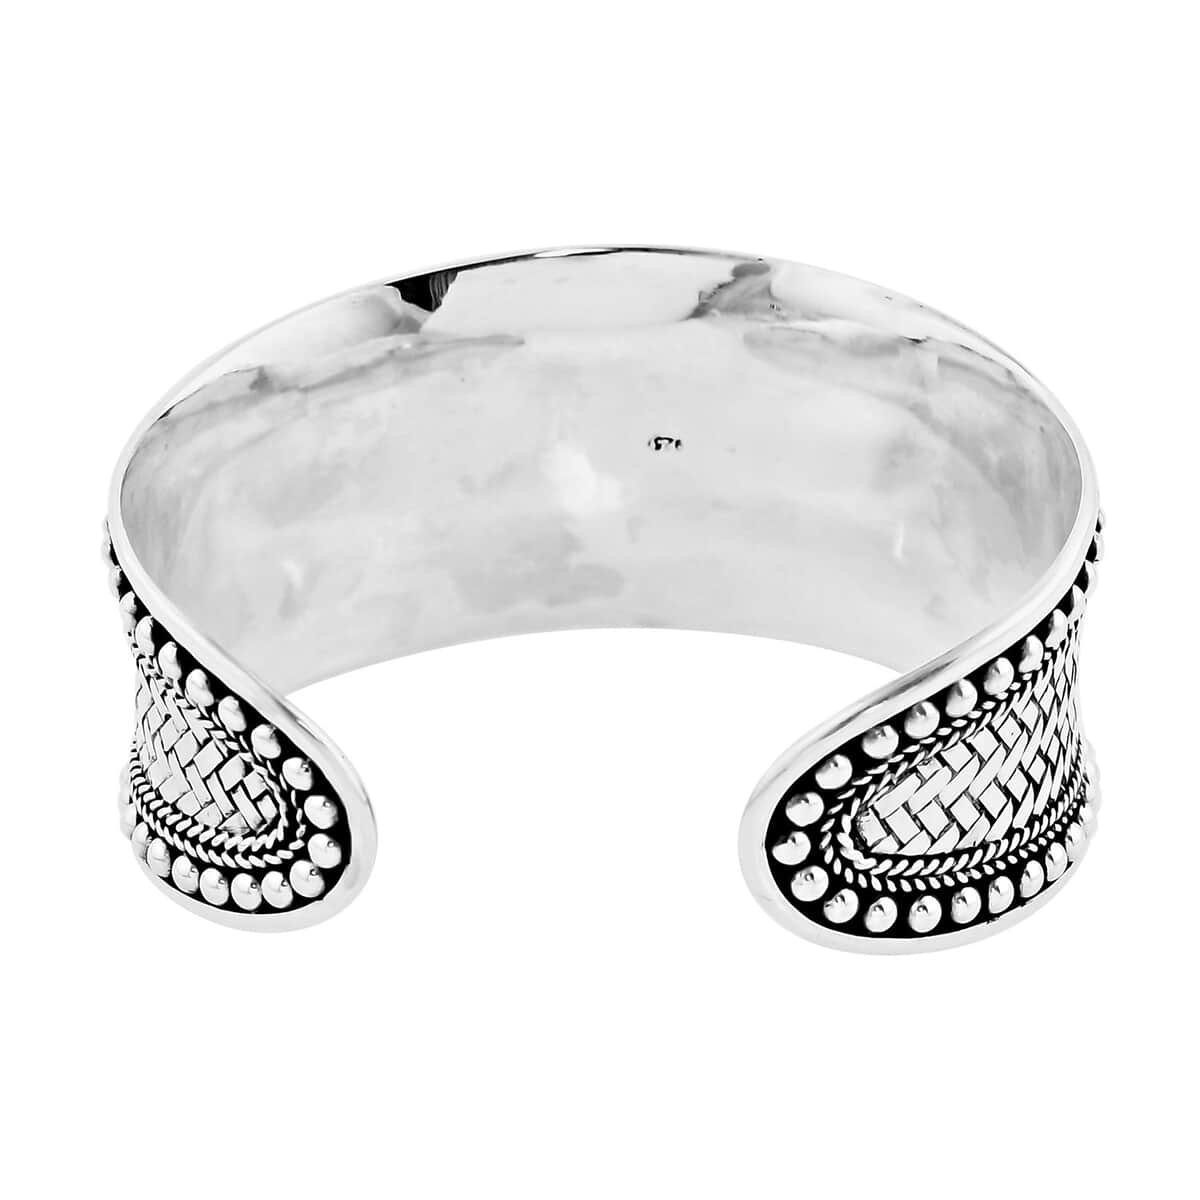 Bali Legacy Sterling Silver Cuff Bracelet (7.25 in) 49.20 Grams image number 4